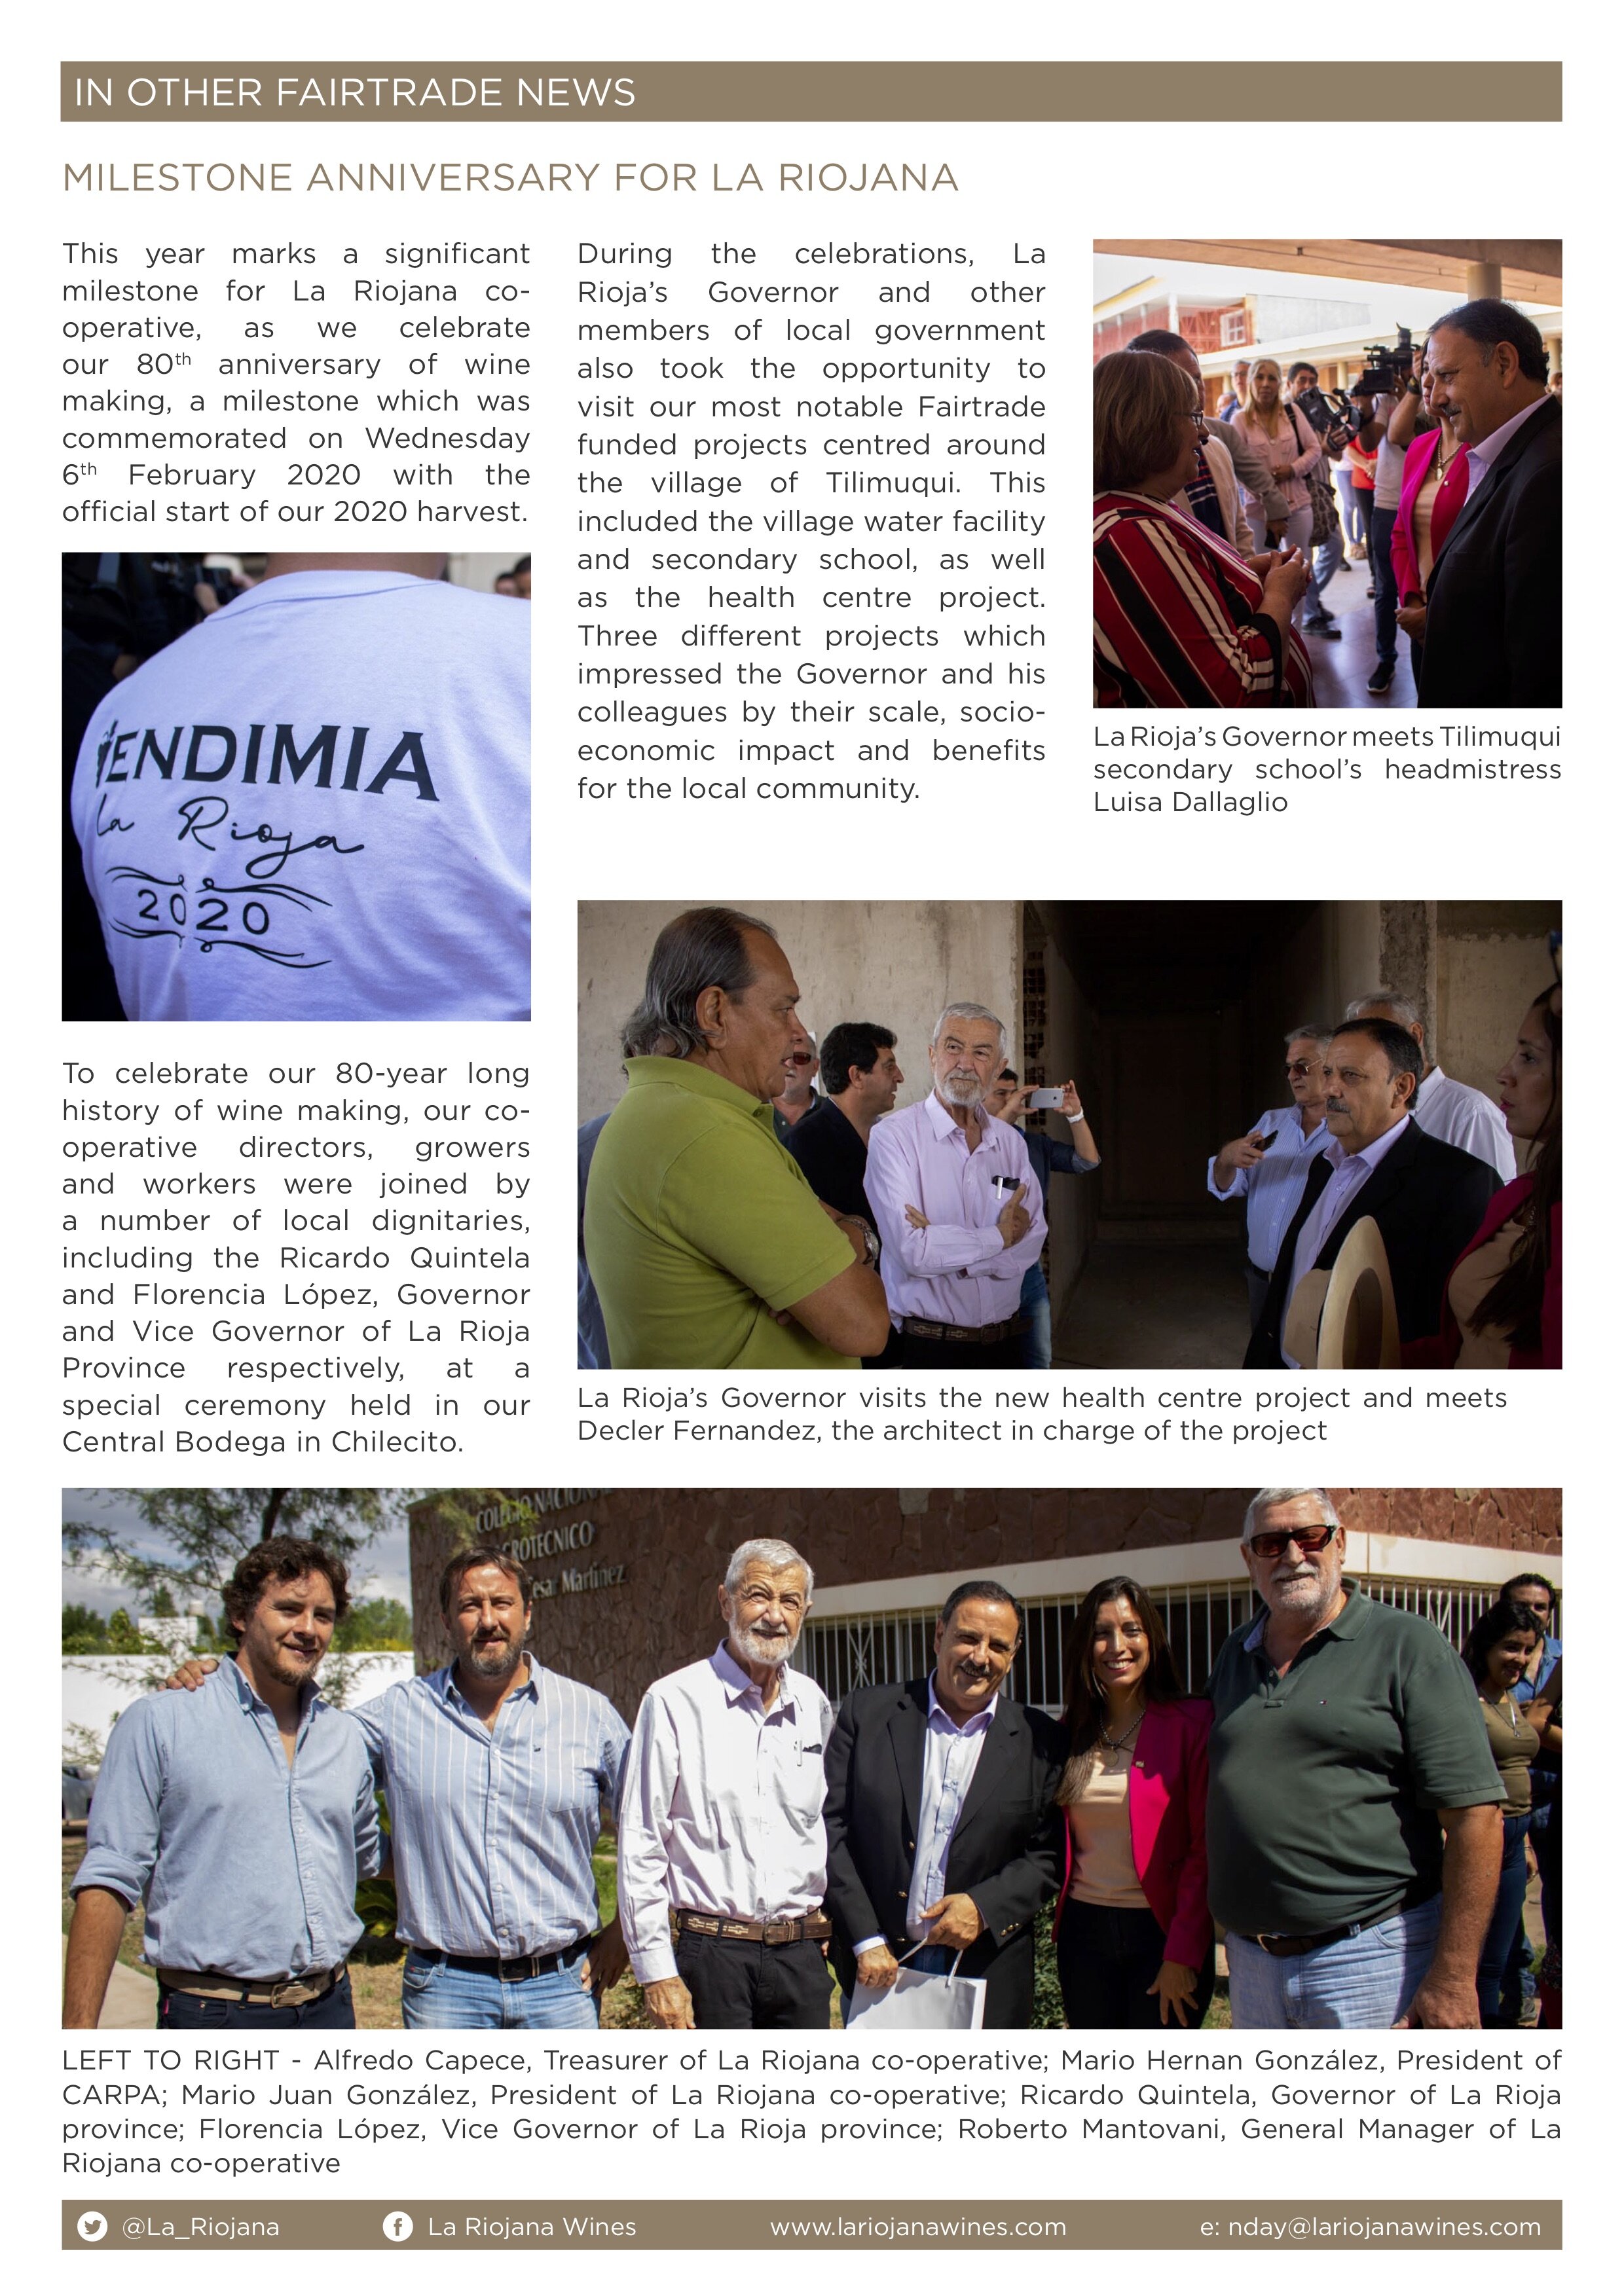 La Riojana Newsletter - Issue 5 - March 2020- p3.jpg